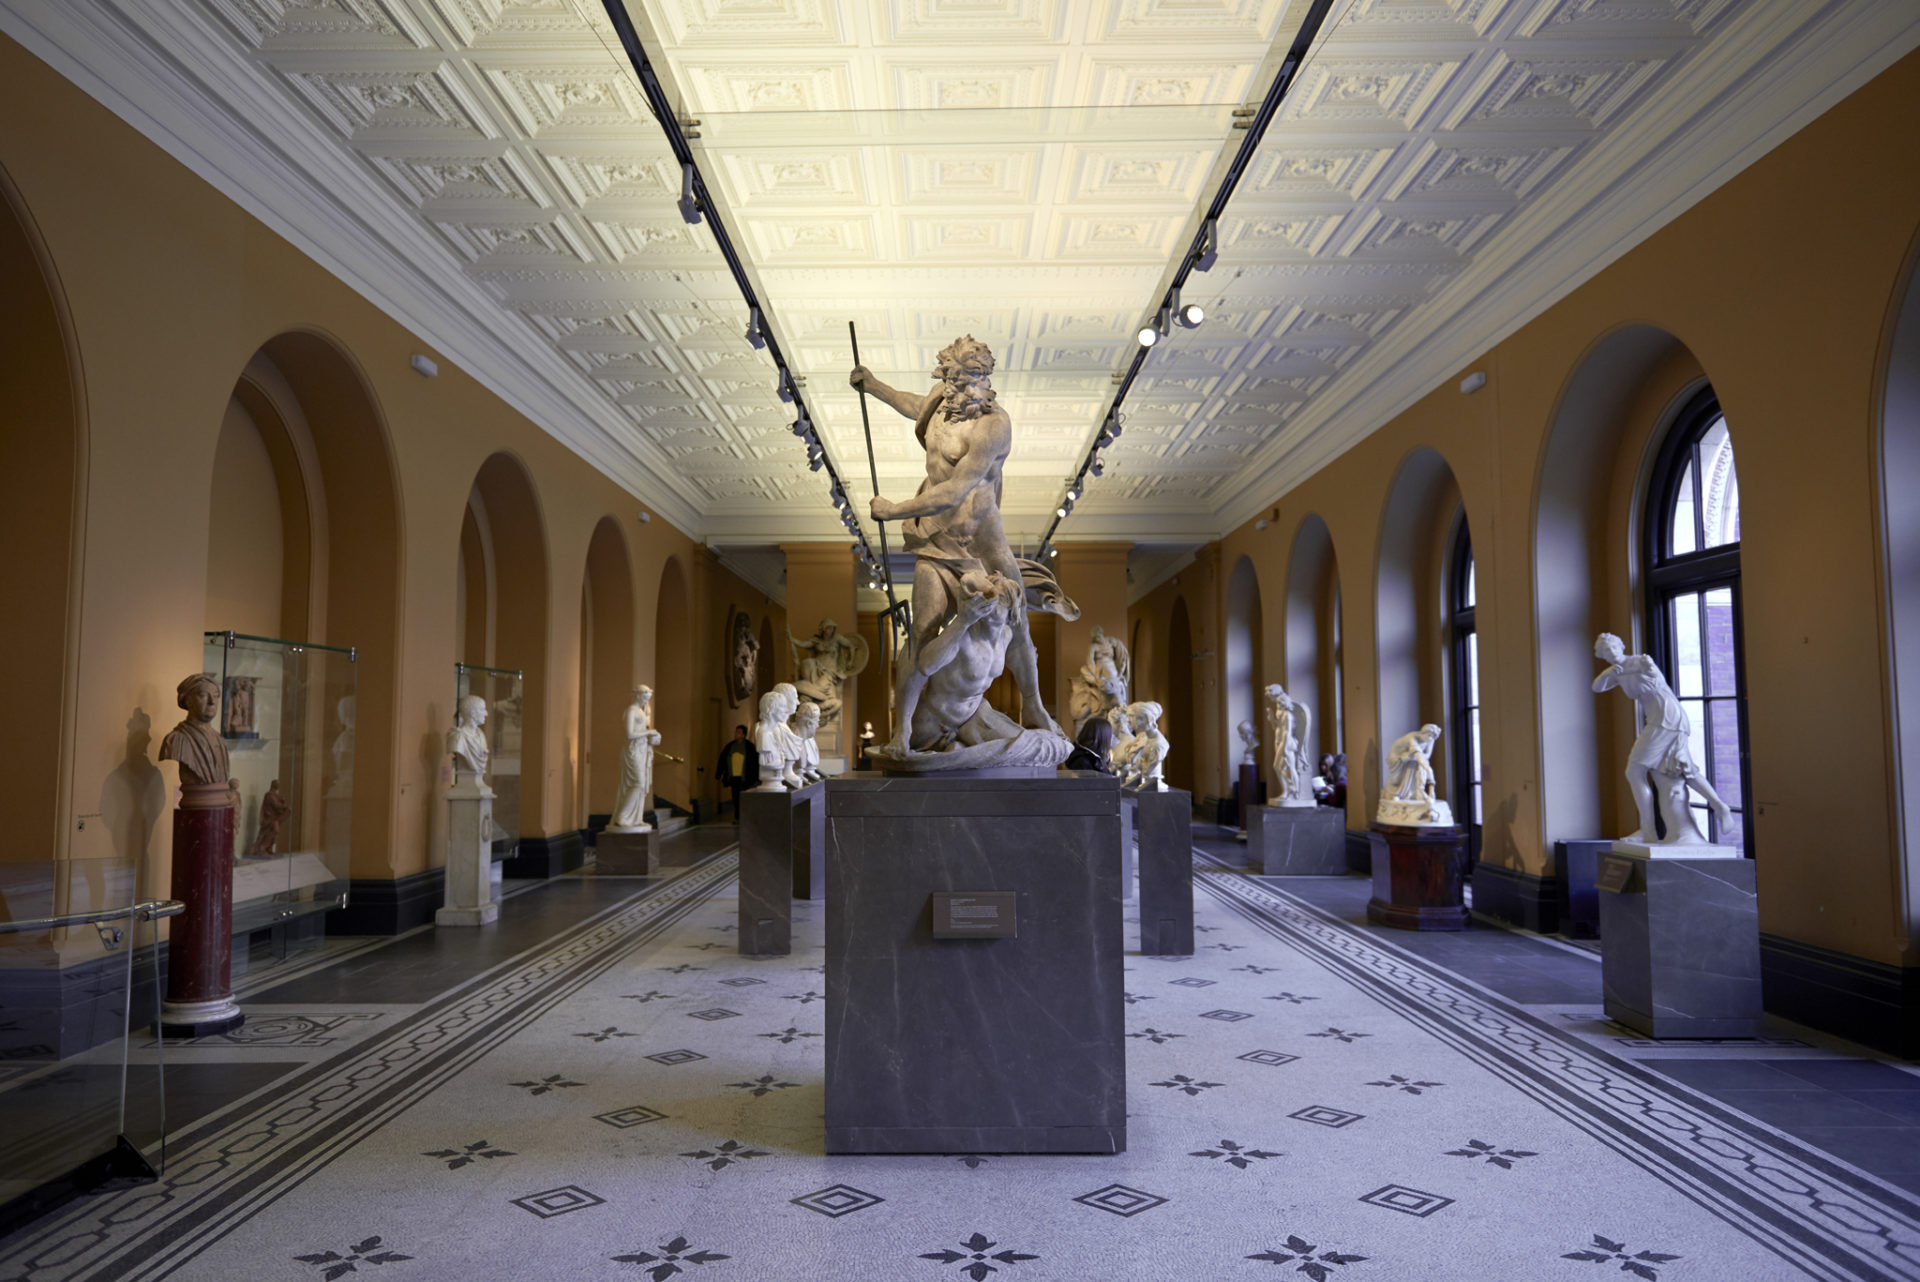 Sculpture Gallery, Victoria and Albert Museum. London, UK, 2019